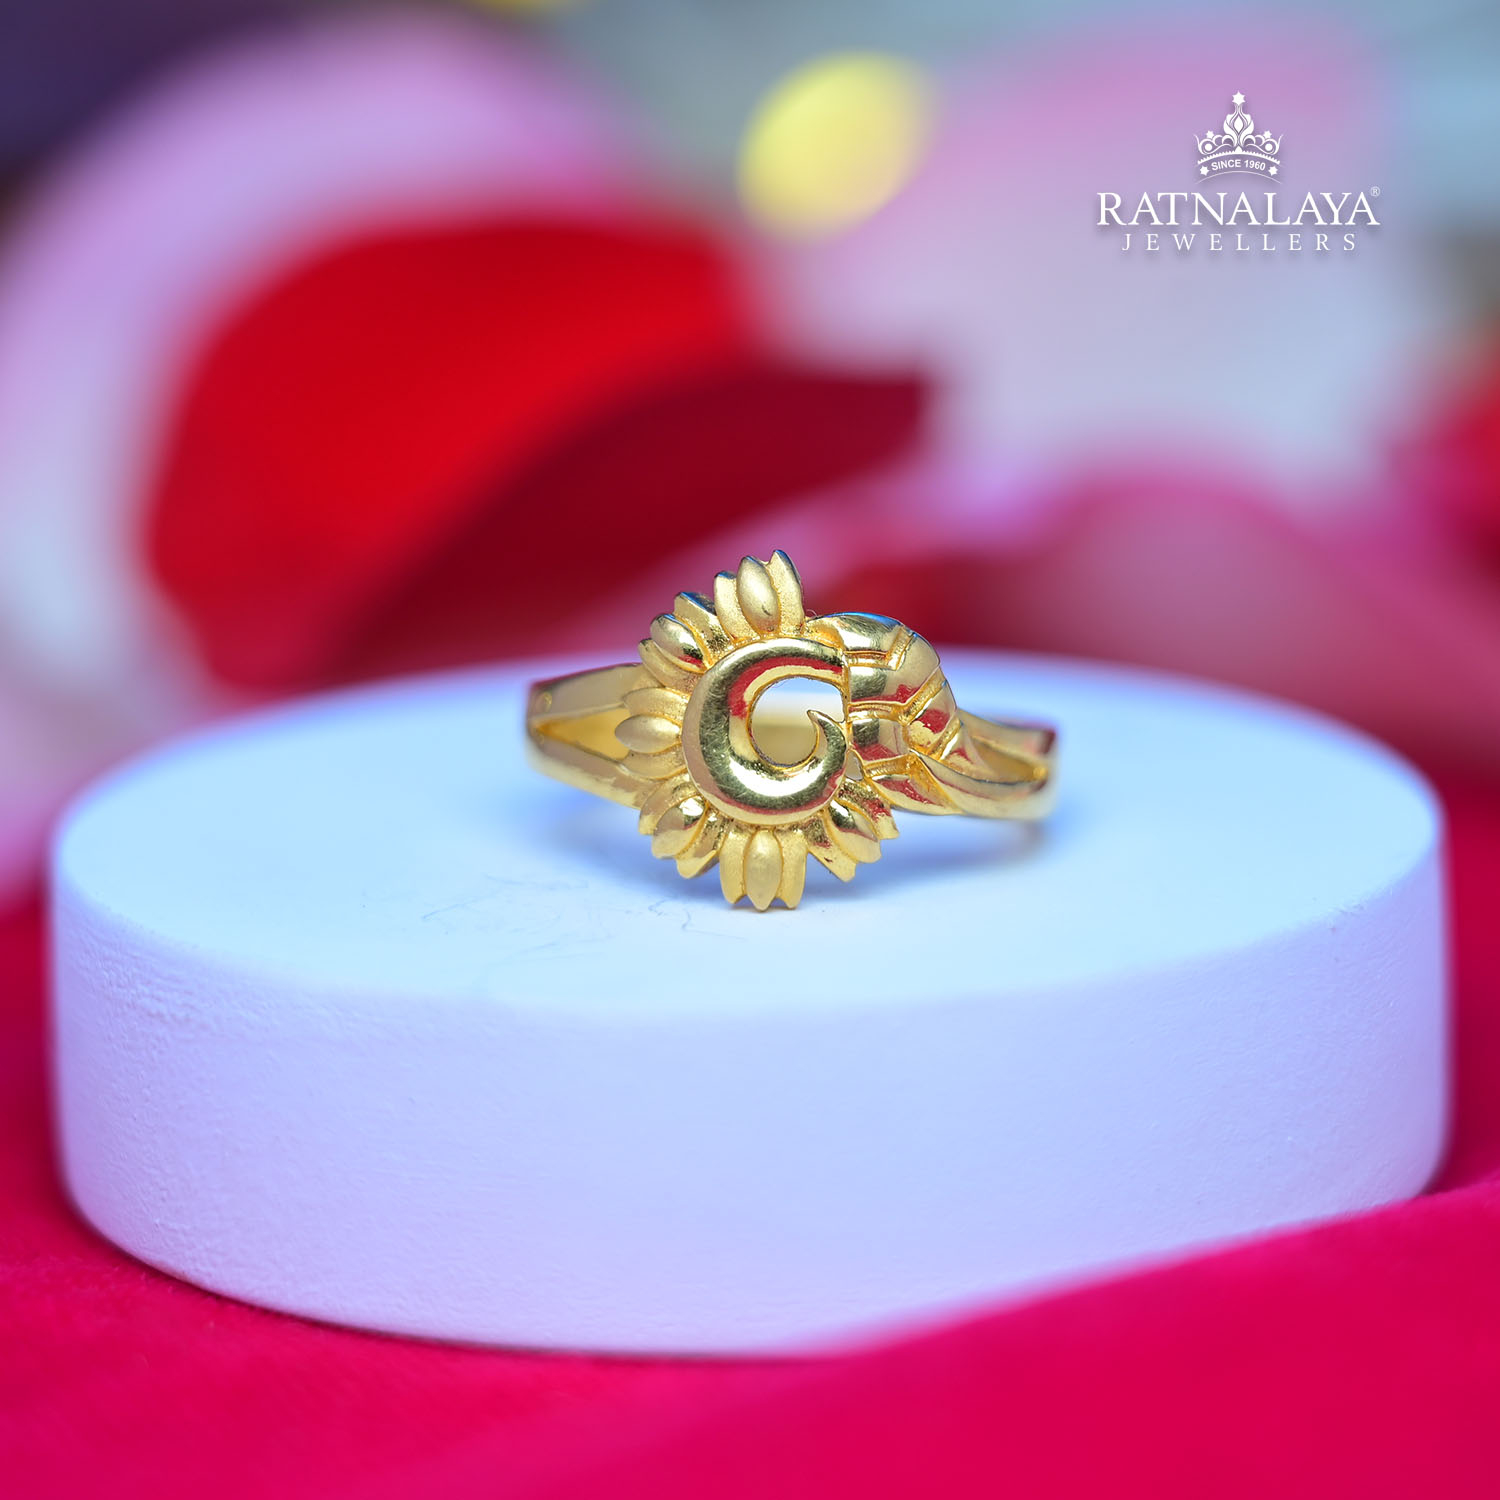 Dazzling Fancy Twist Diamond Ring for Under 30K - Candere by Kalyan  Jewellers